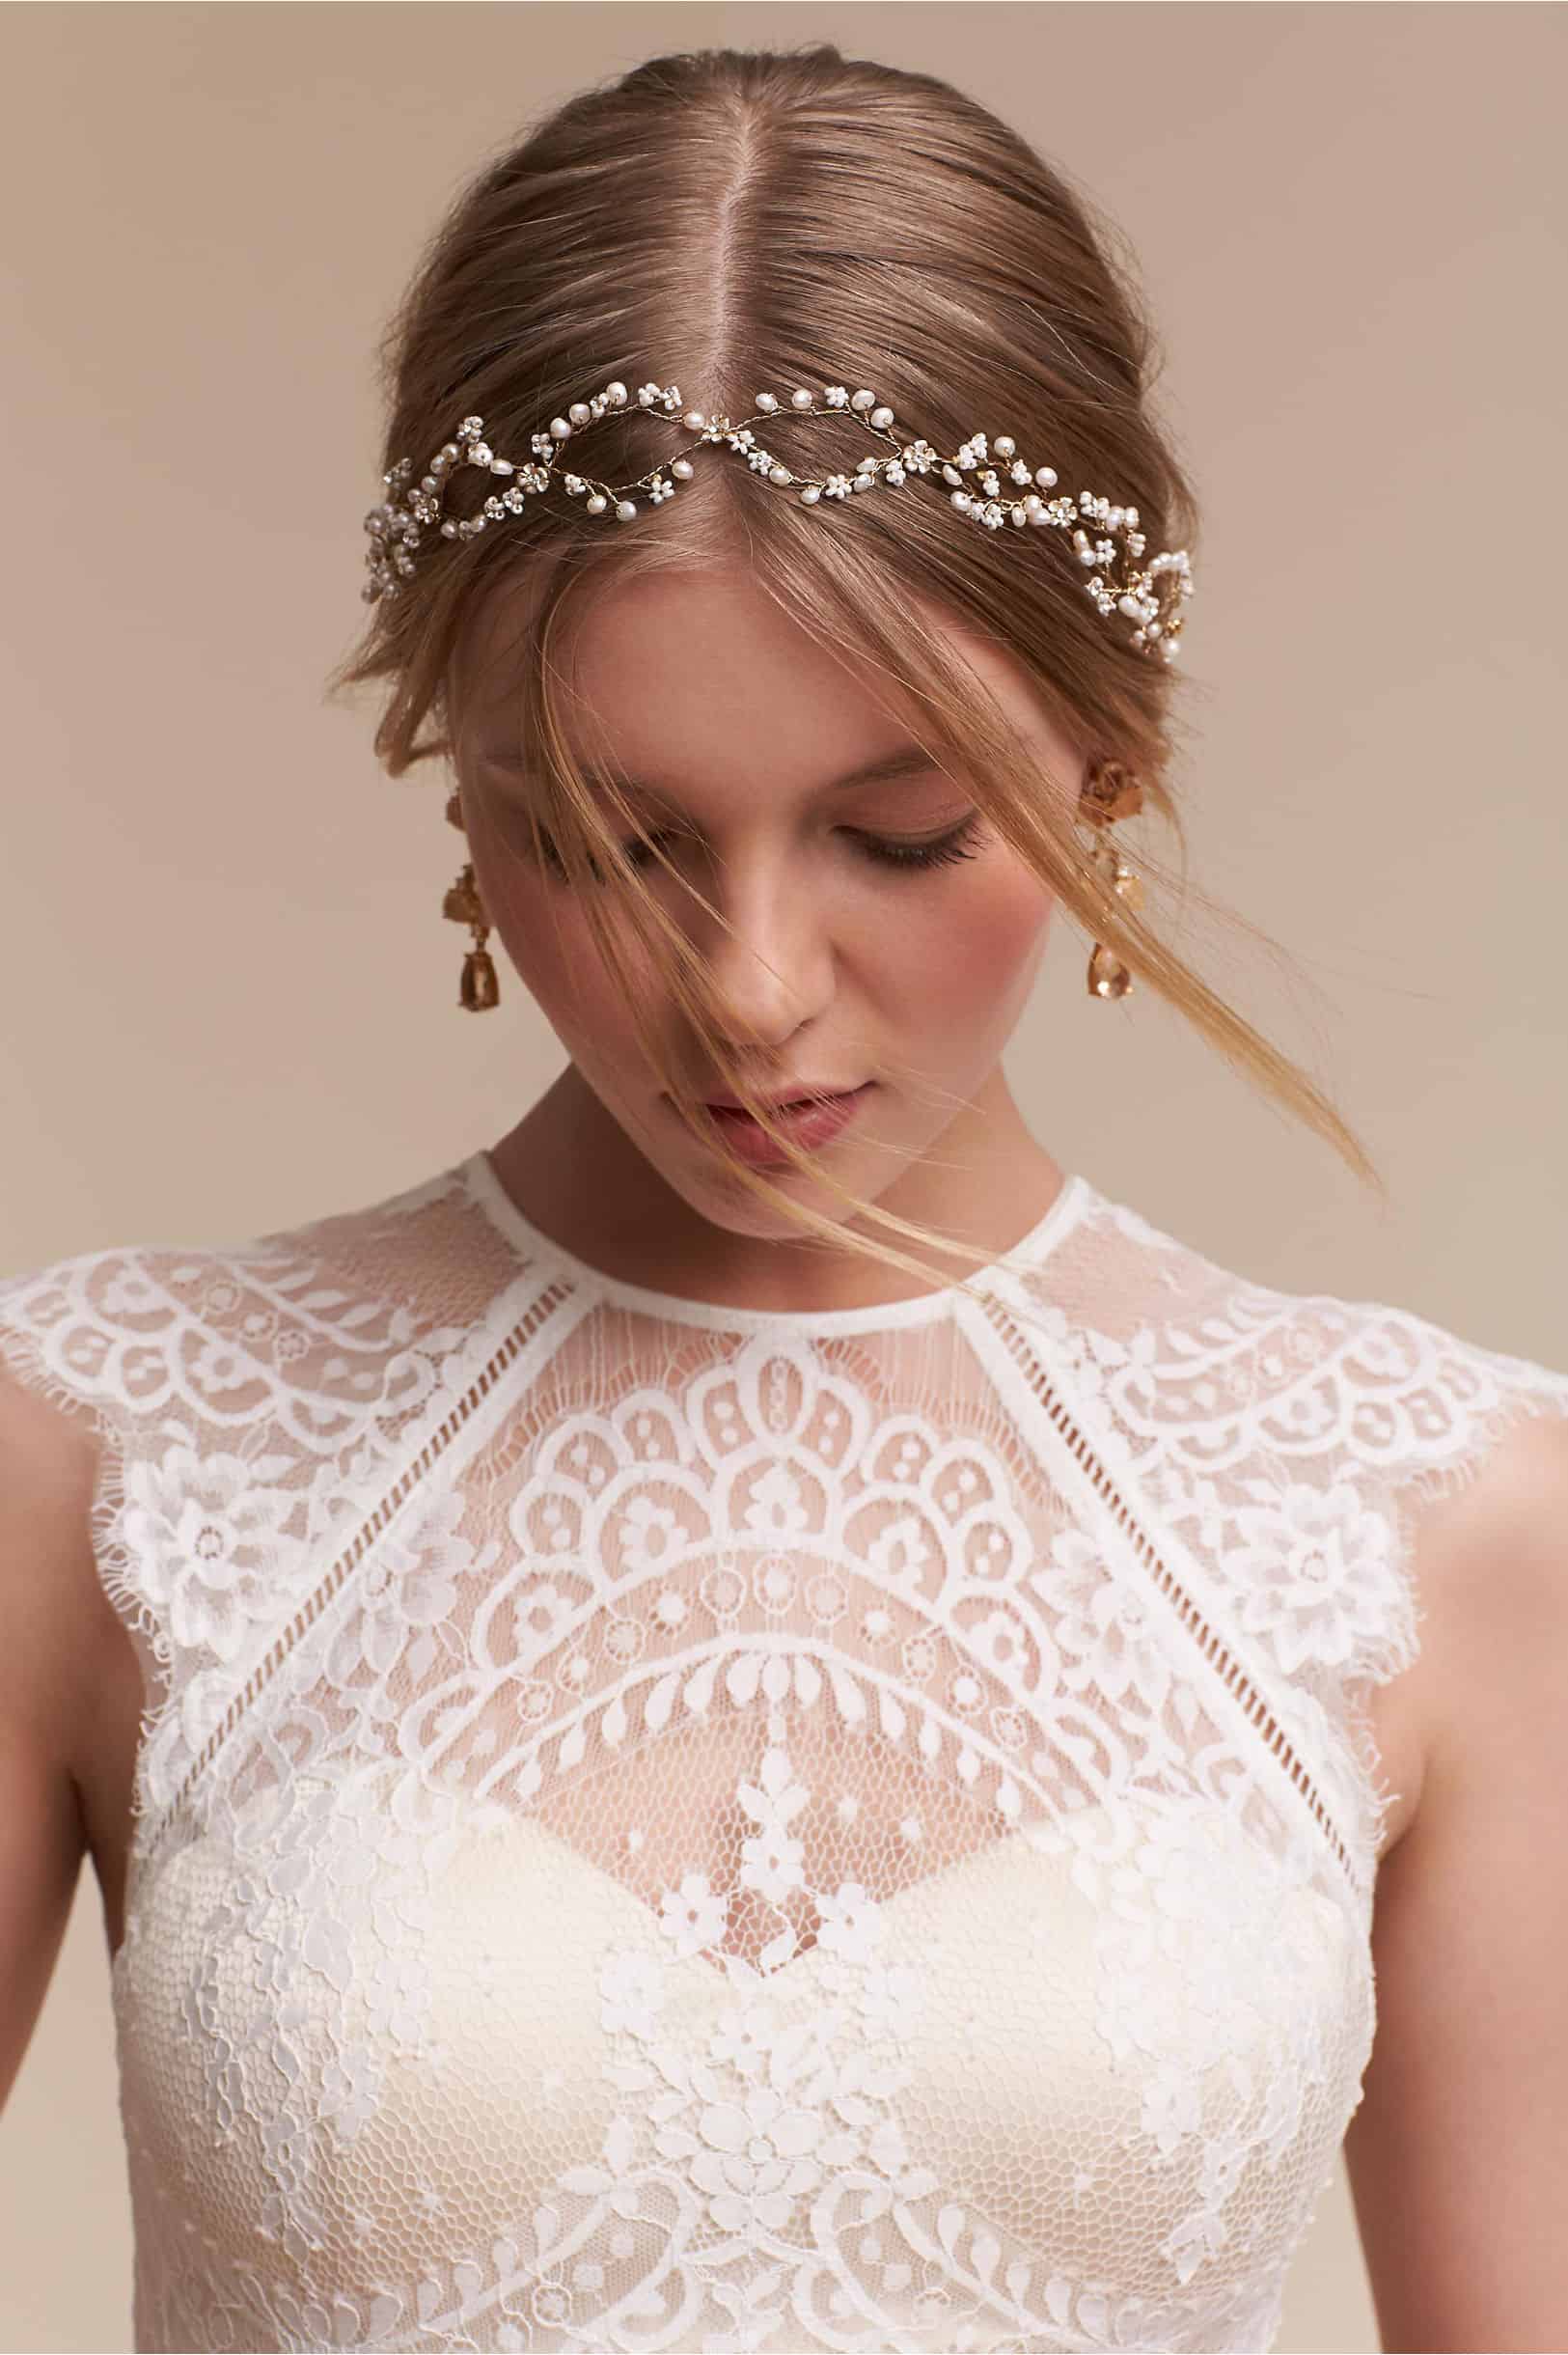 Swarovski Crystal Bridal Headpiece Wedding Hair Accessories White Beads Pearldrop Halo